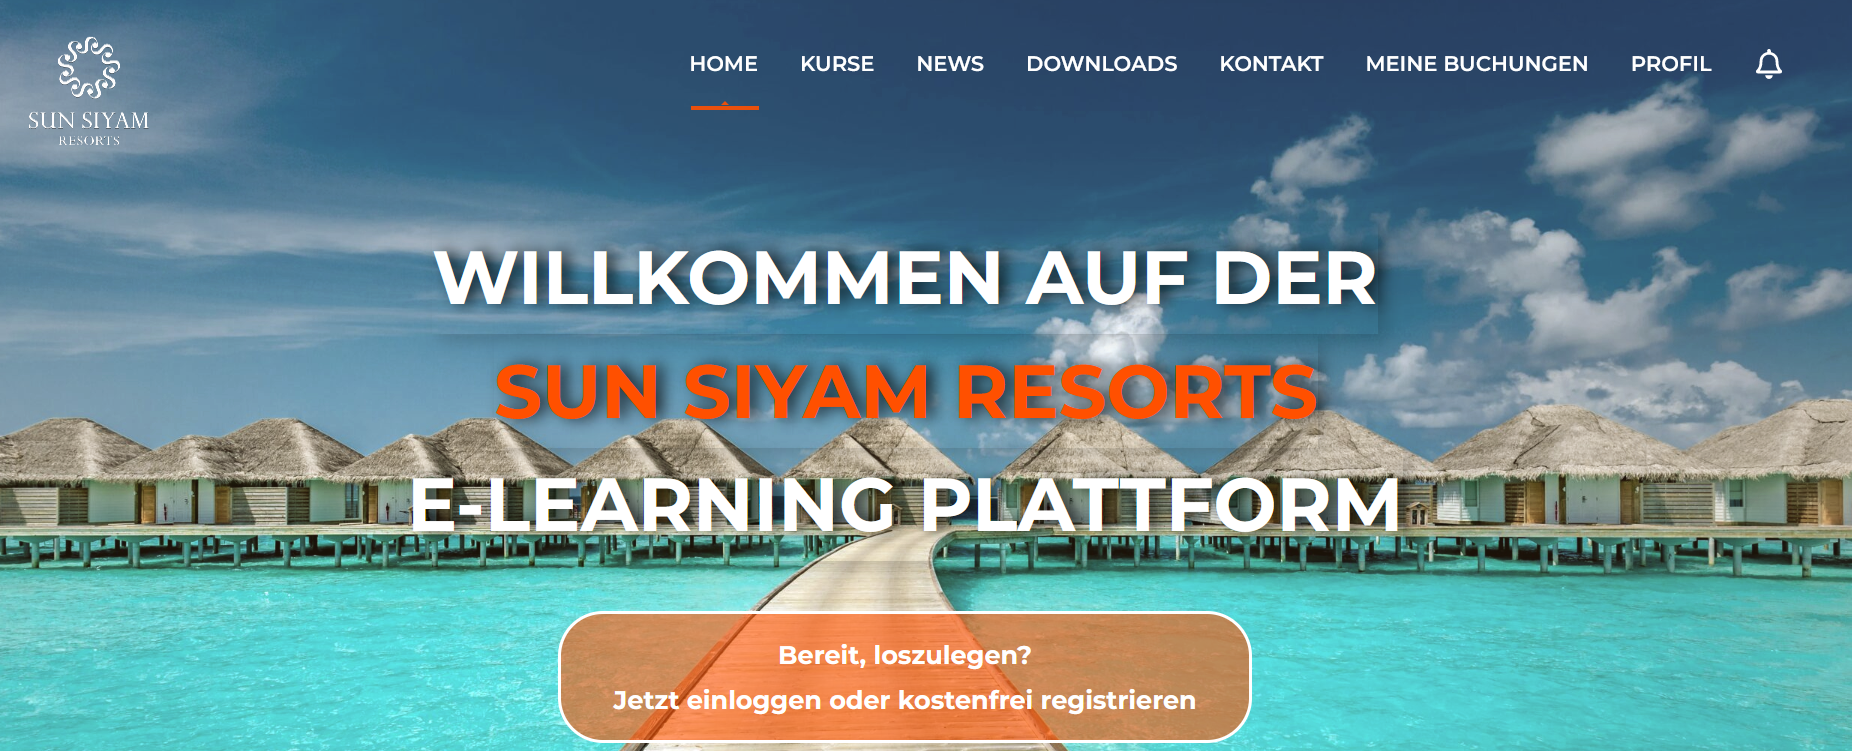 Sun Siyam Resorts запускает E-Learning платформу для агентов